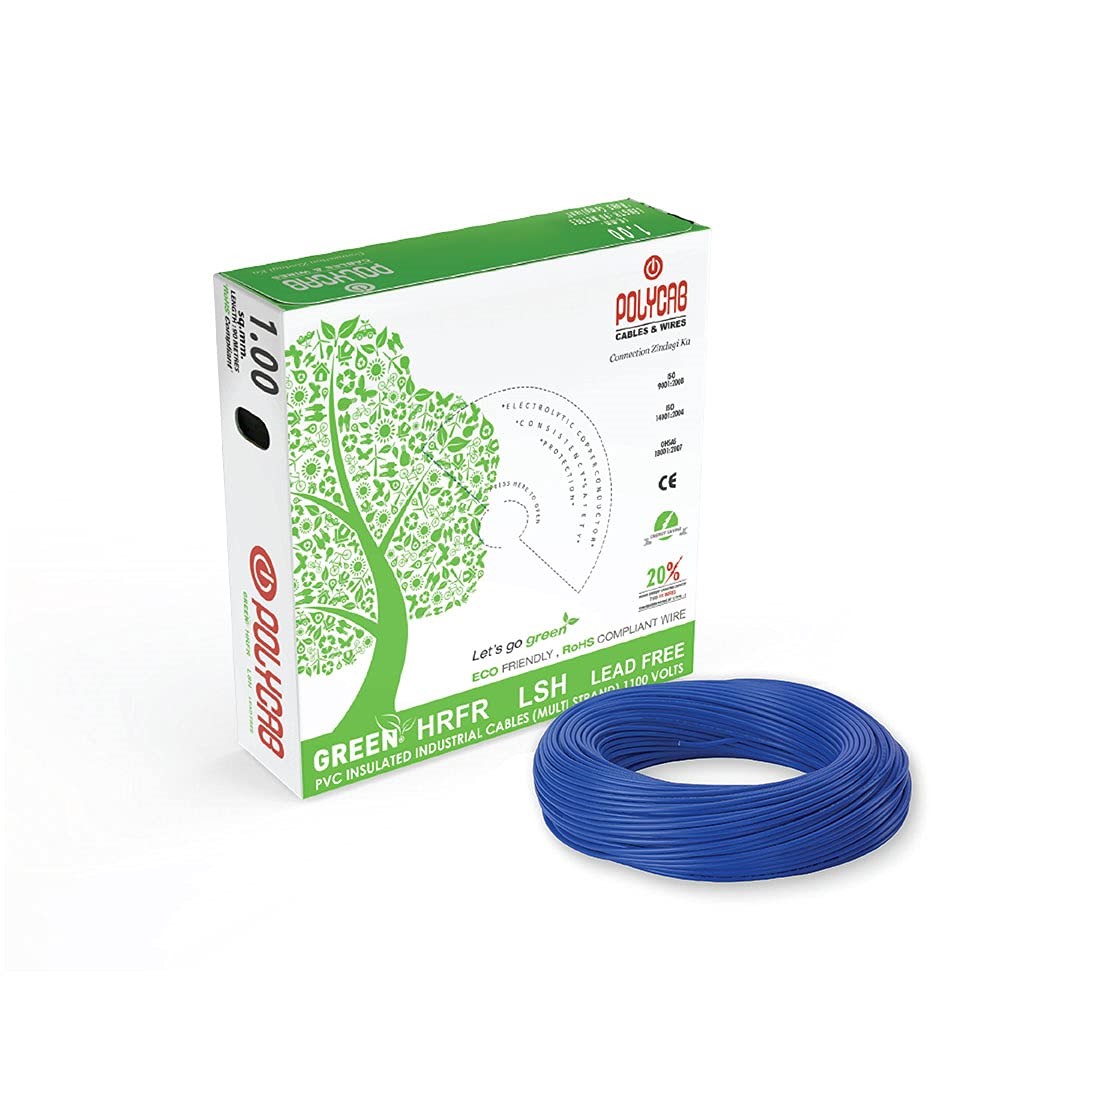 Polycab Eco-Friendly Green Wire